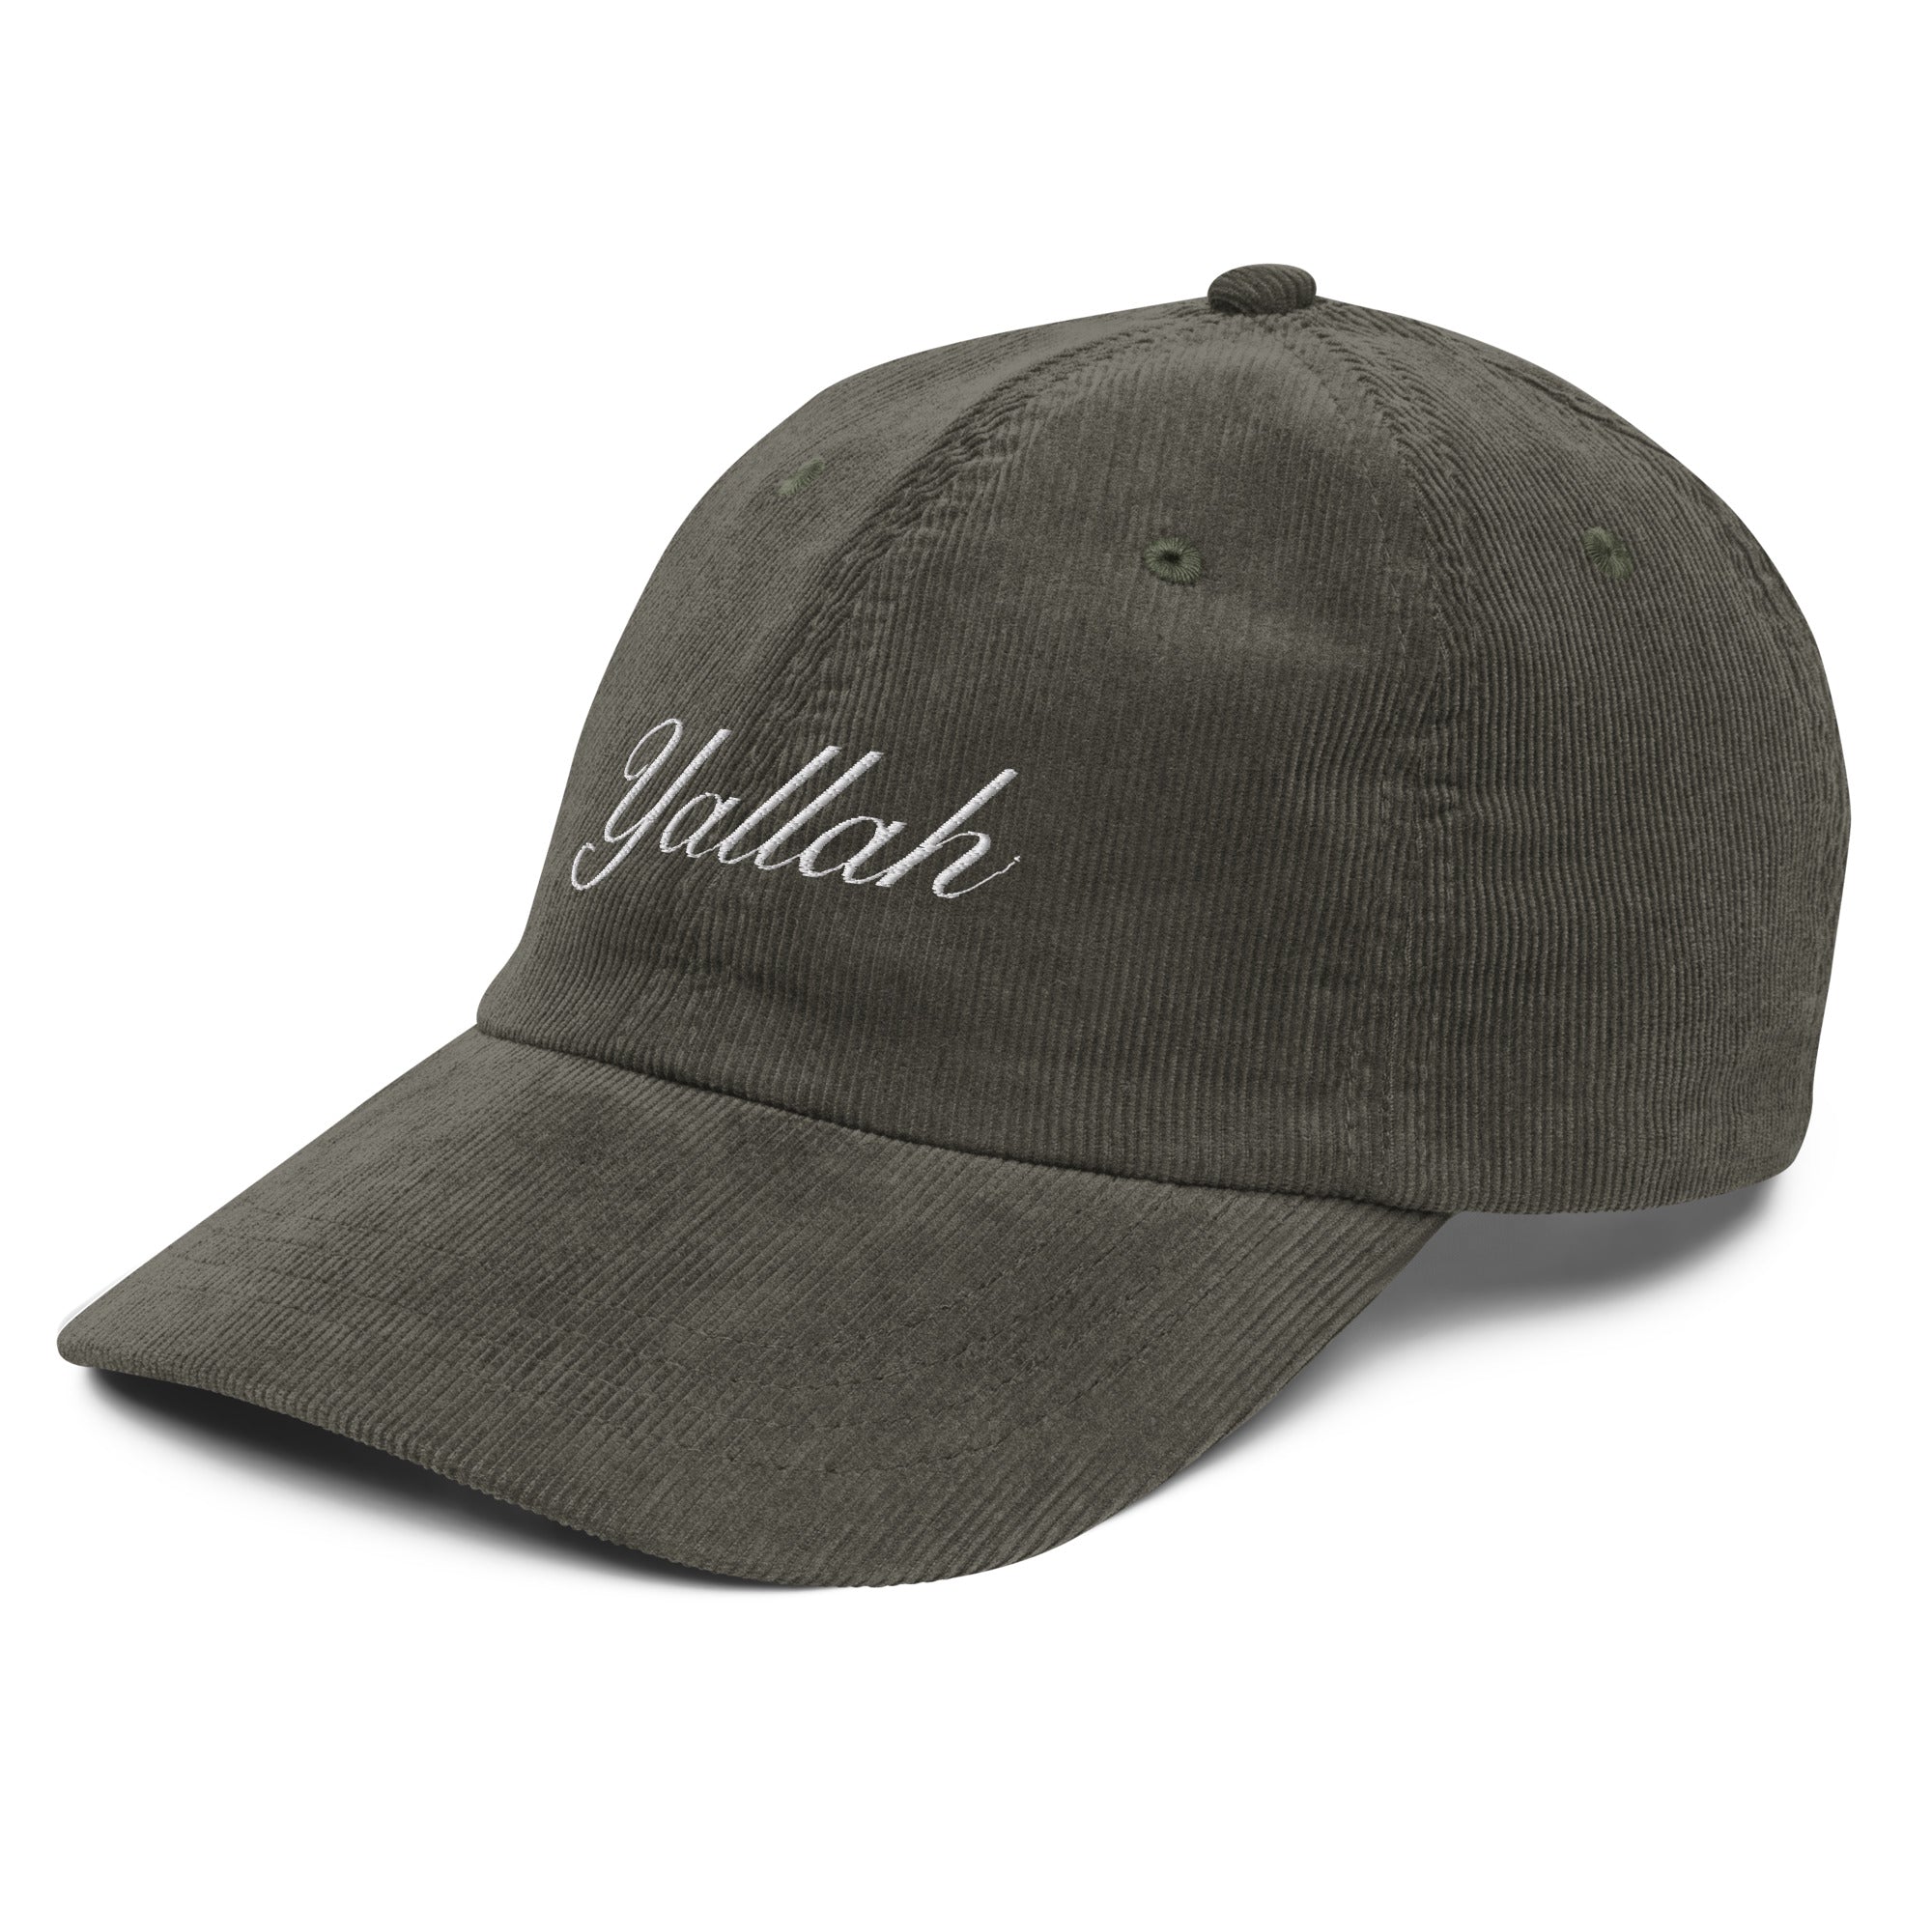 Yallah Hat